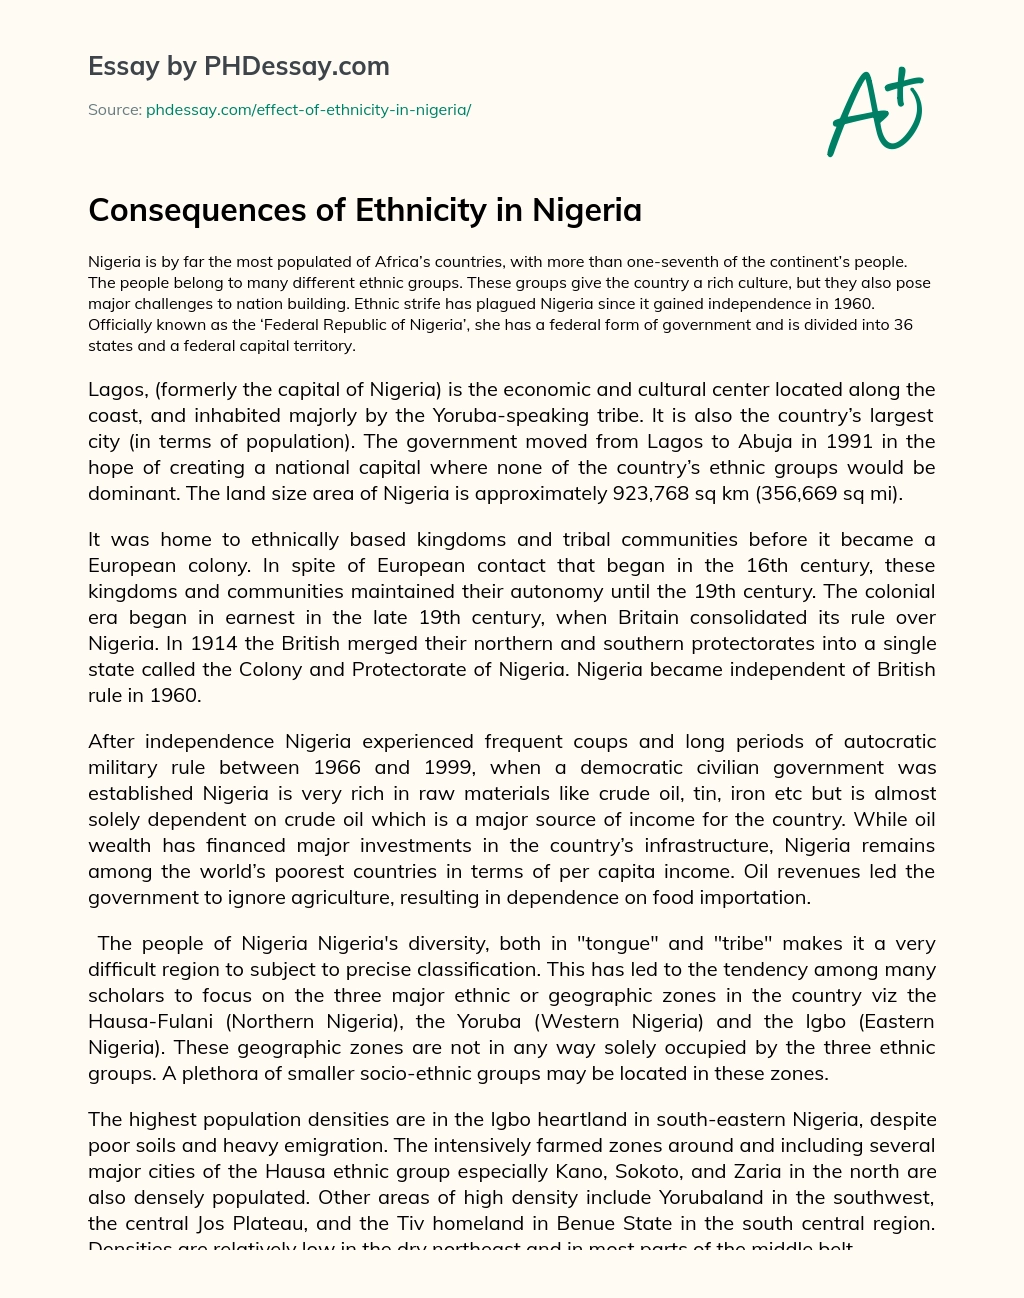 Consequences of Ethnicity in Nigeria essay